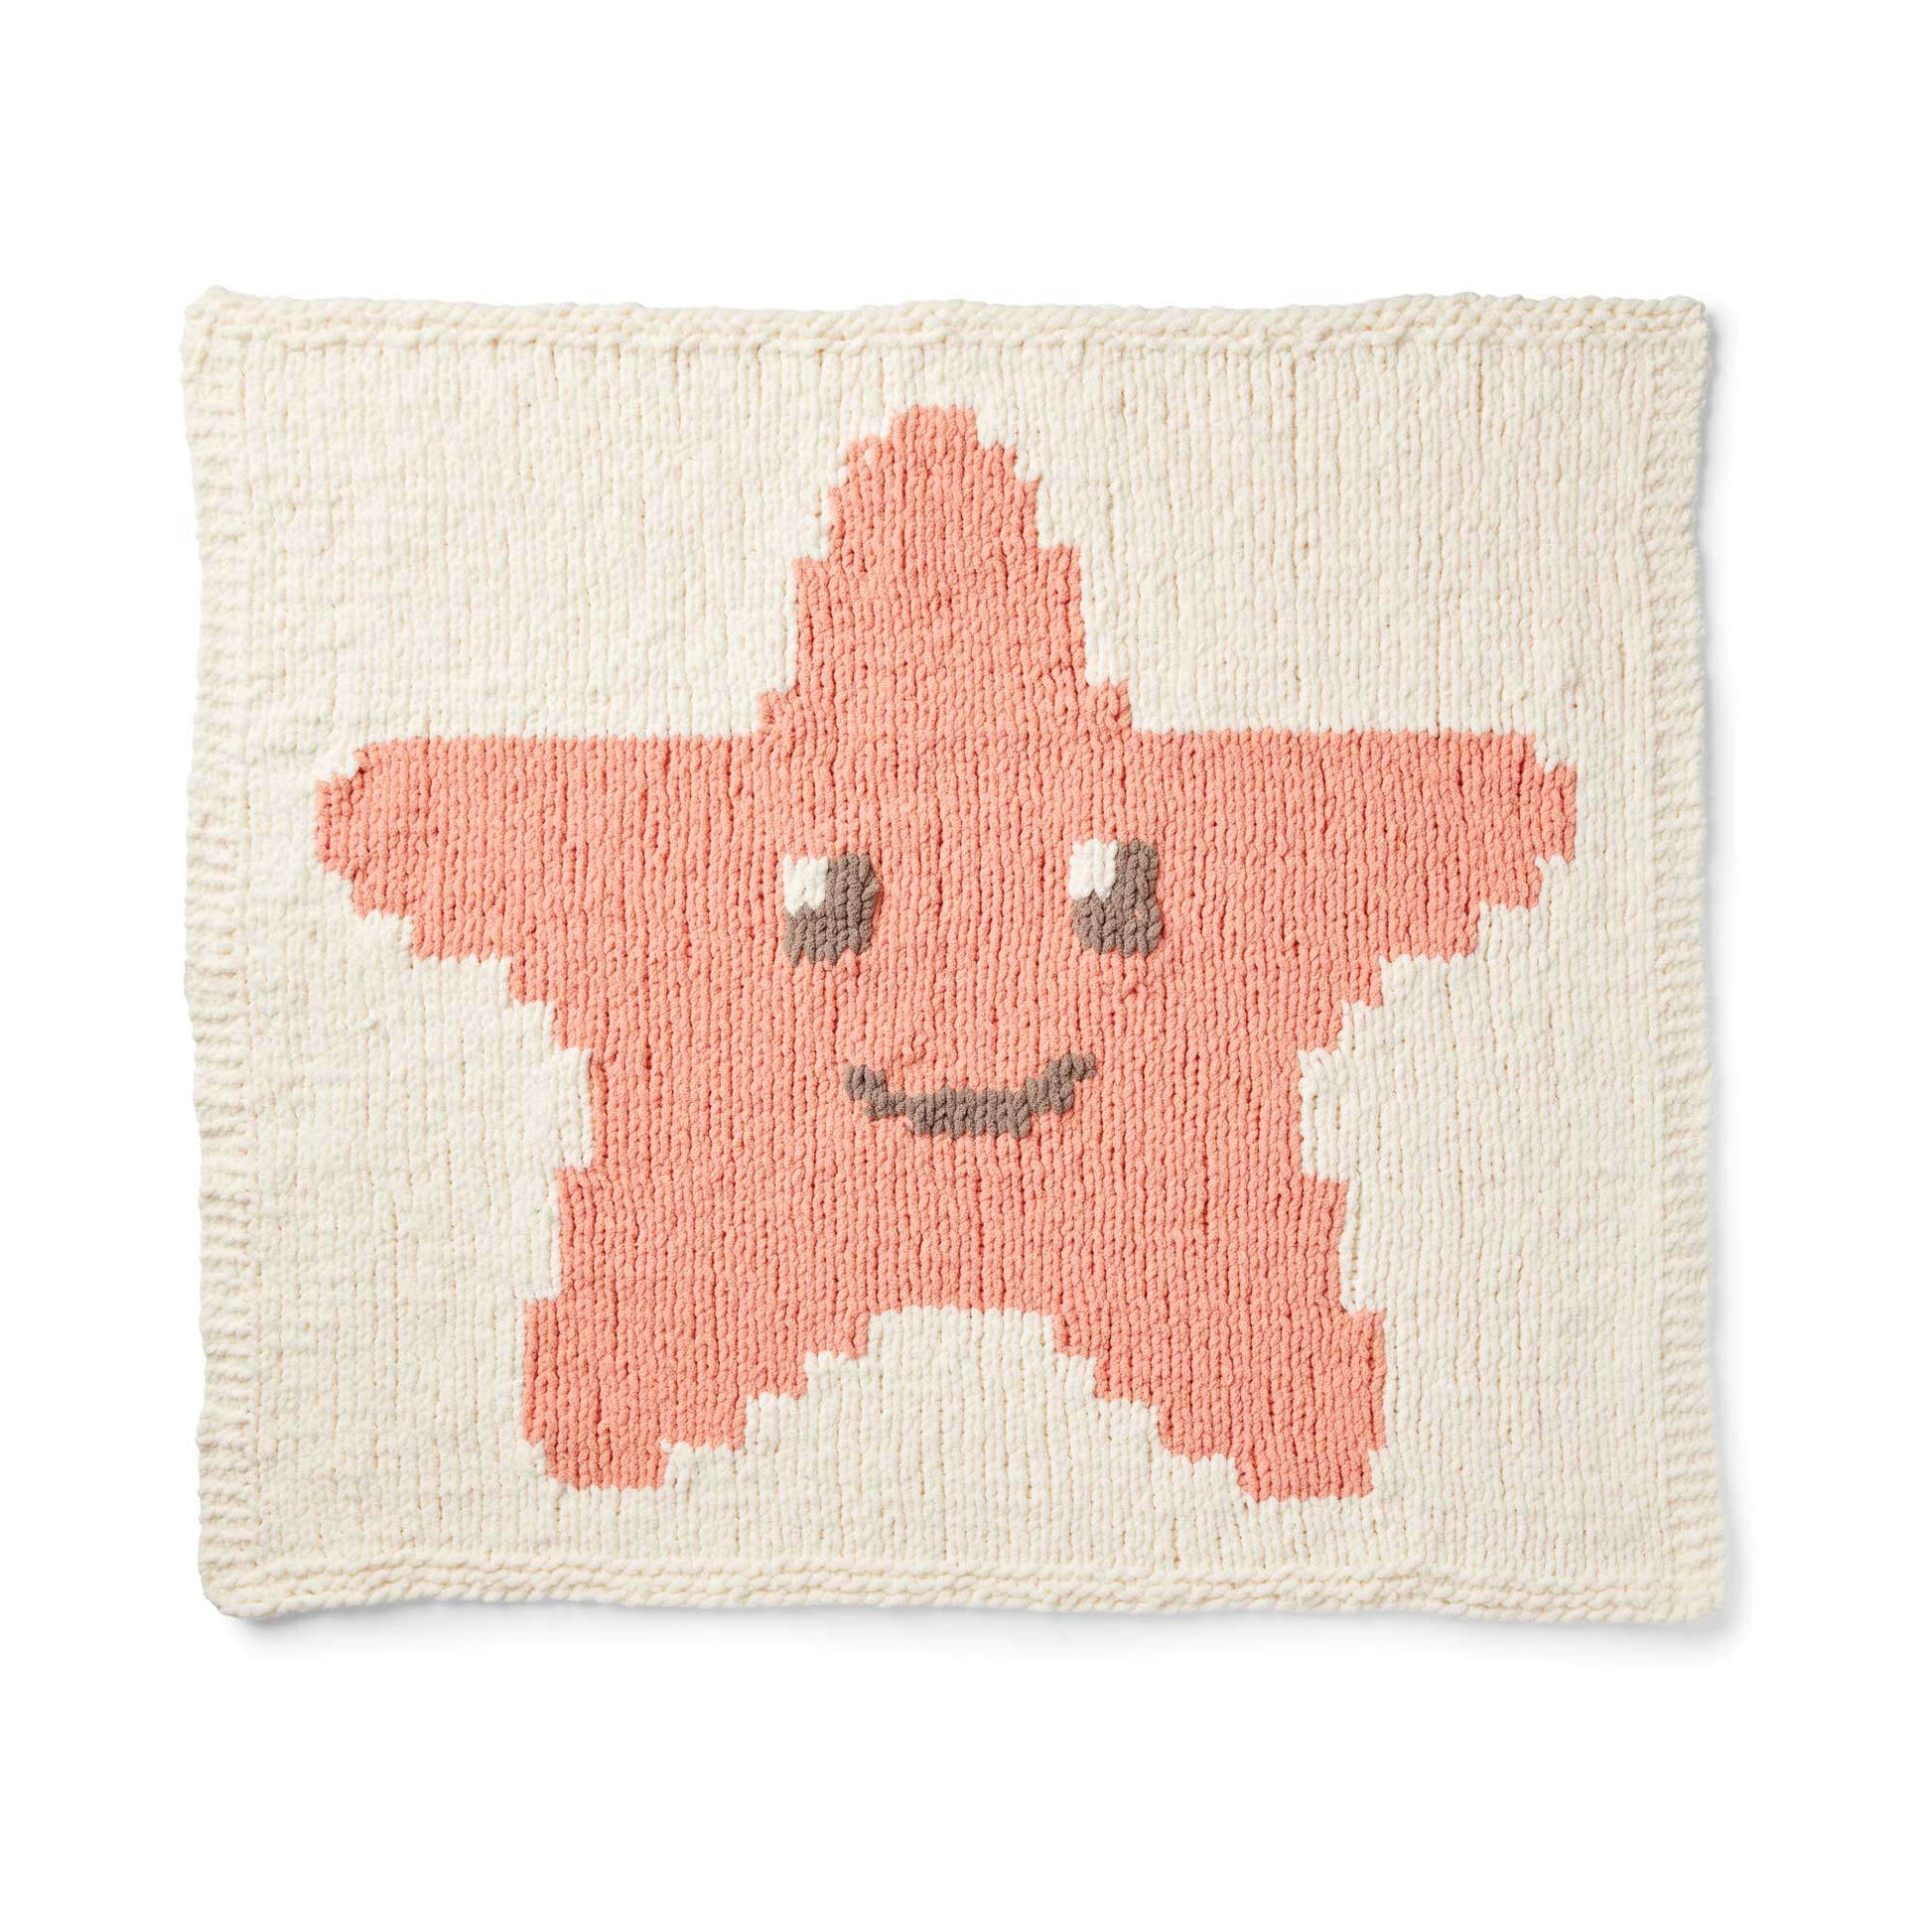 Bernat Knit Intarsia Smiling Starfish Baby Blanket Knit Blanket made in Bernat Baby Blanket yarn